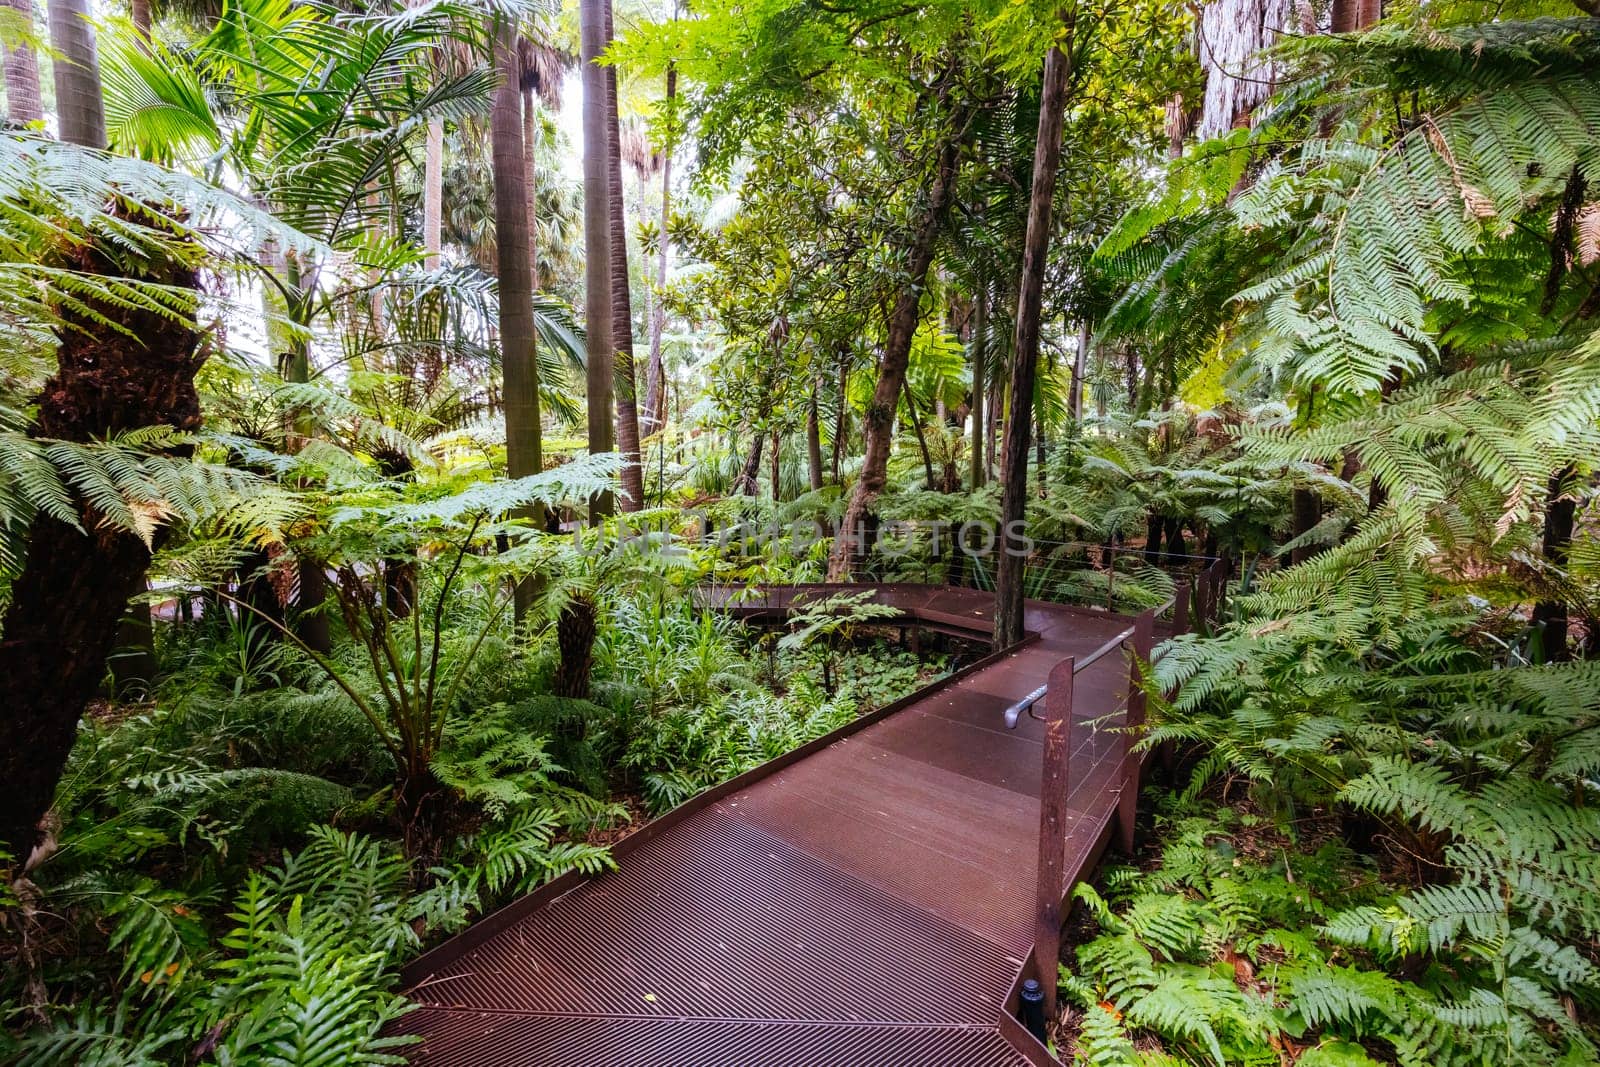 Royal Botanic Gardens in Melbourne Australia by FiledIMAGE